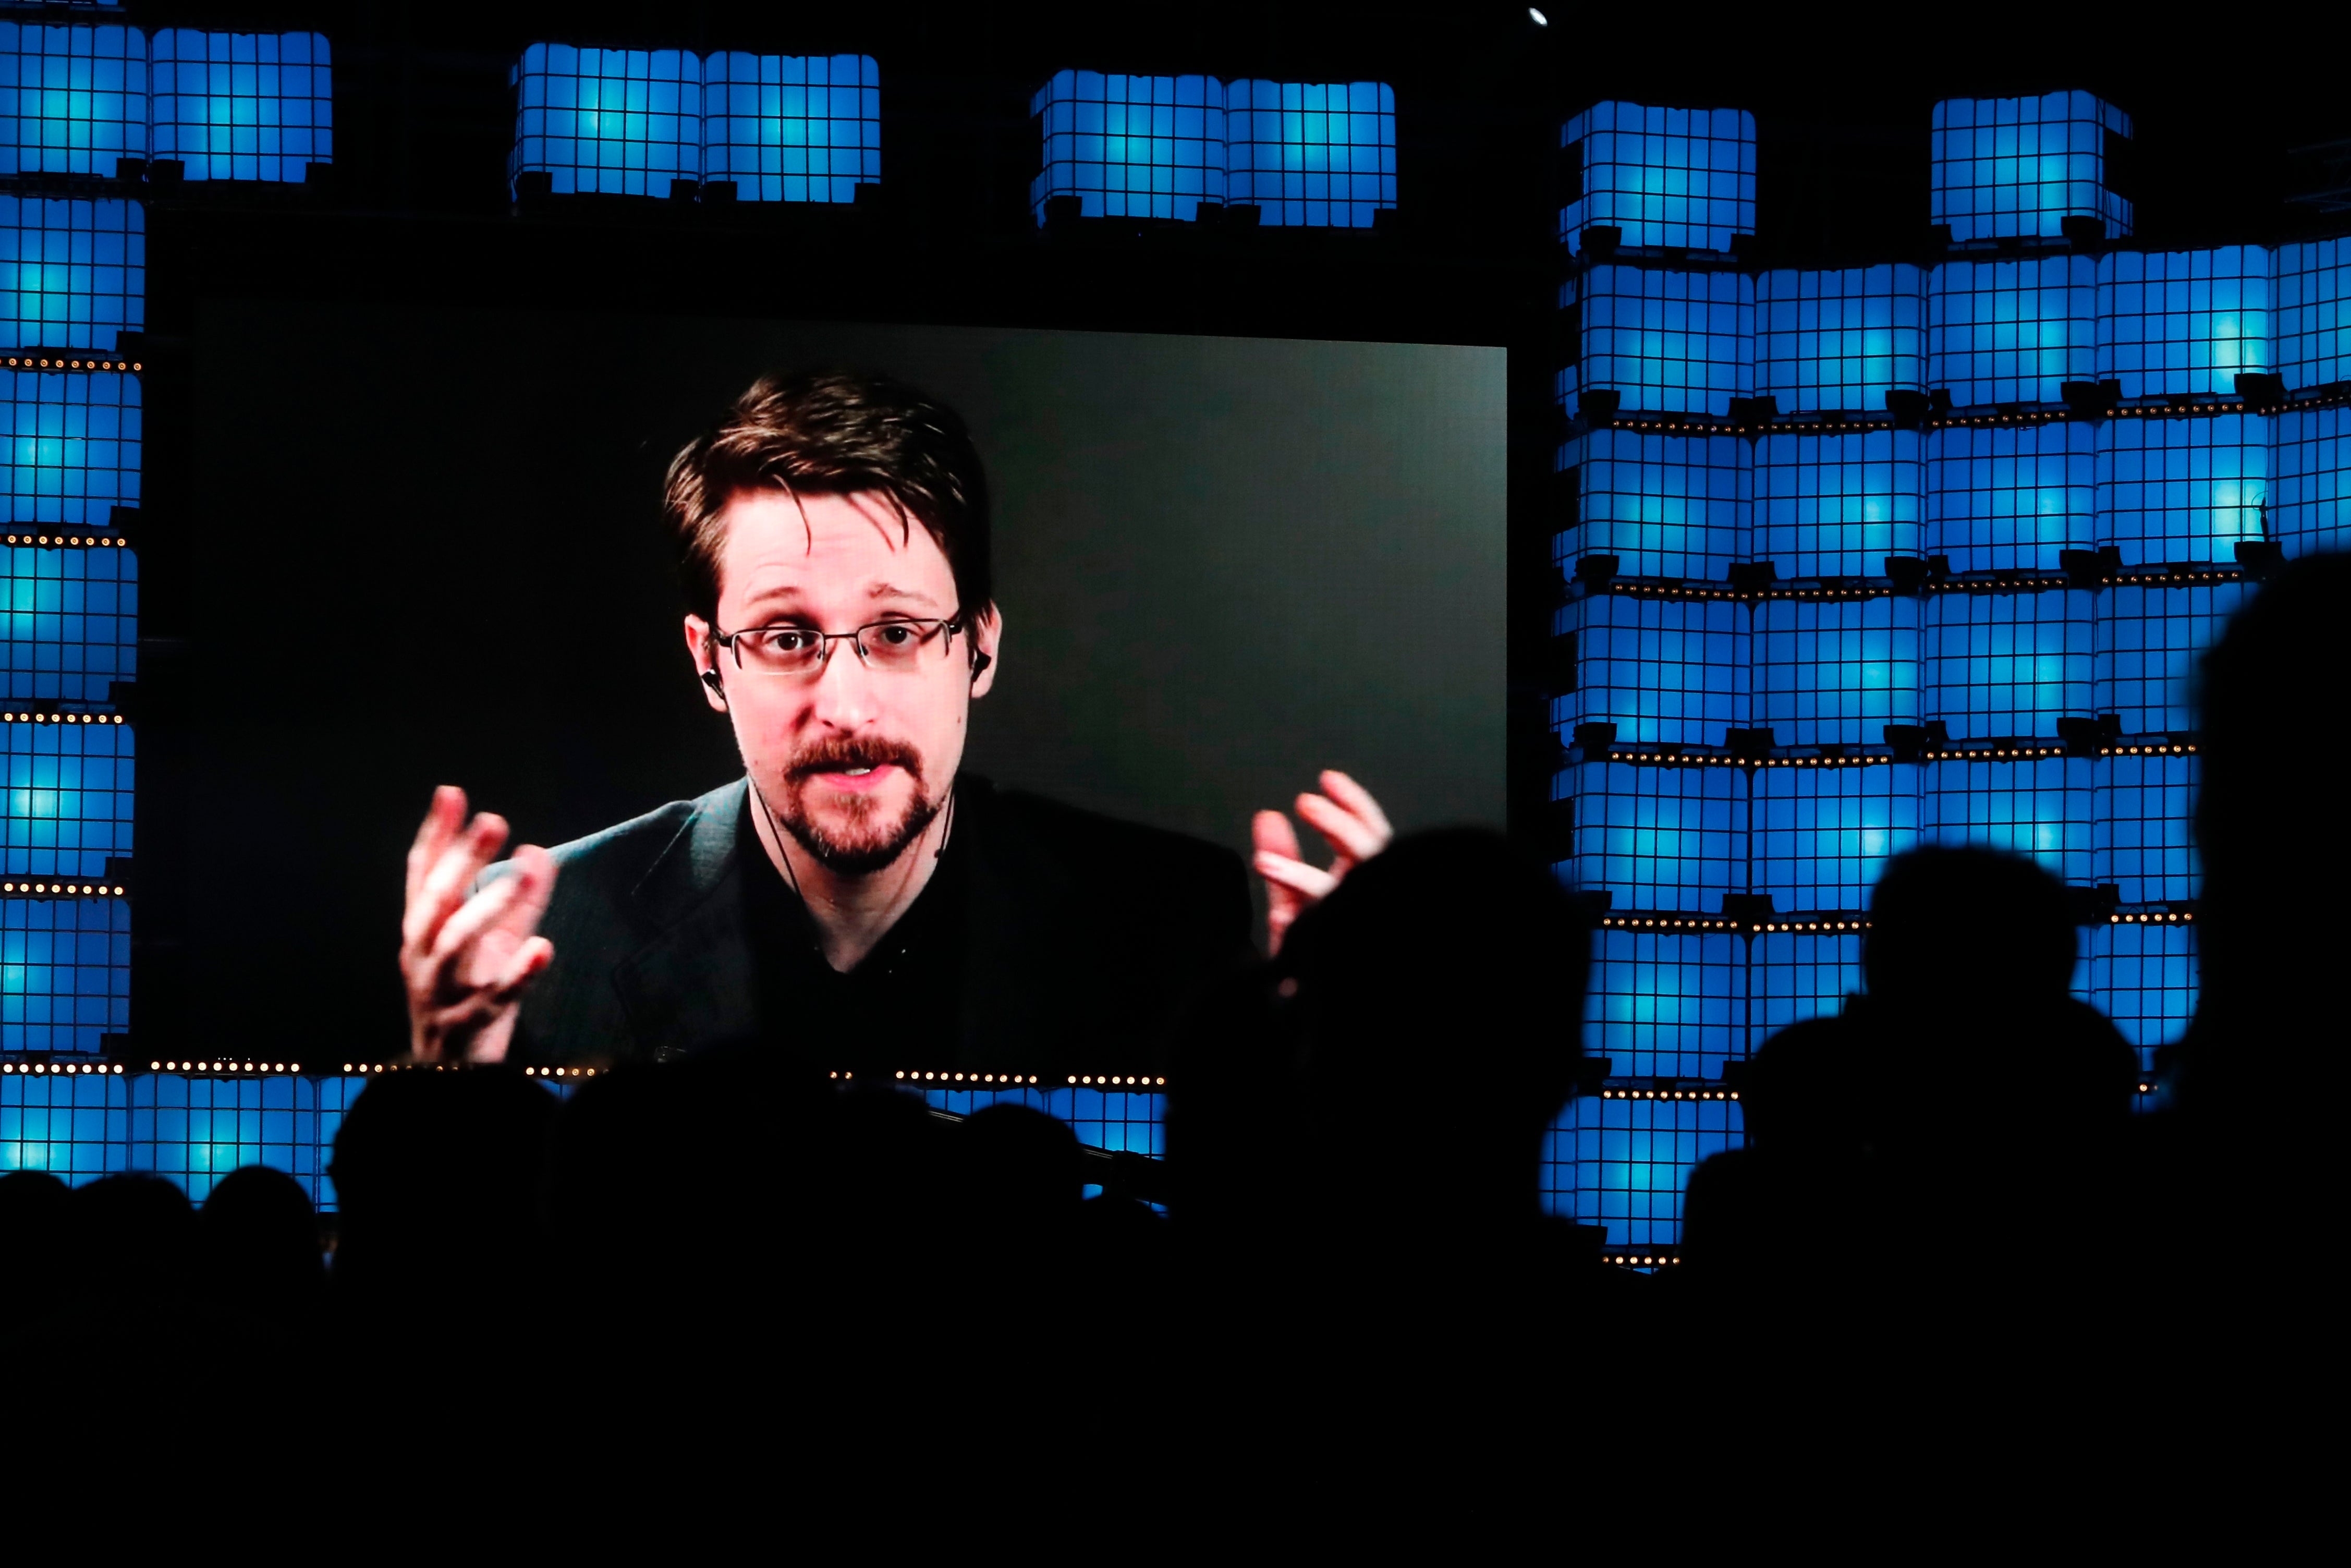 Edward Snowden was granted asylum in Russia in 2013